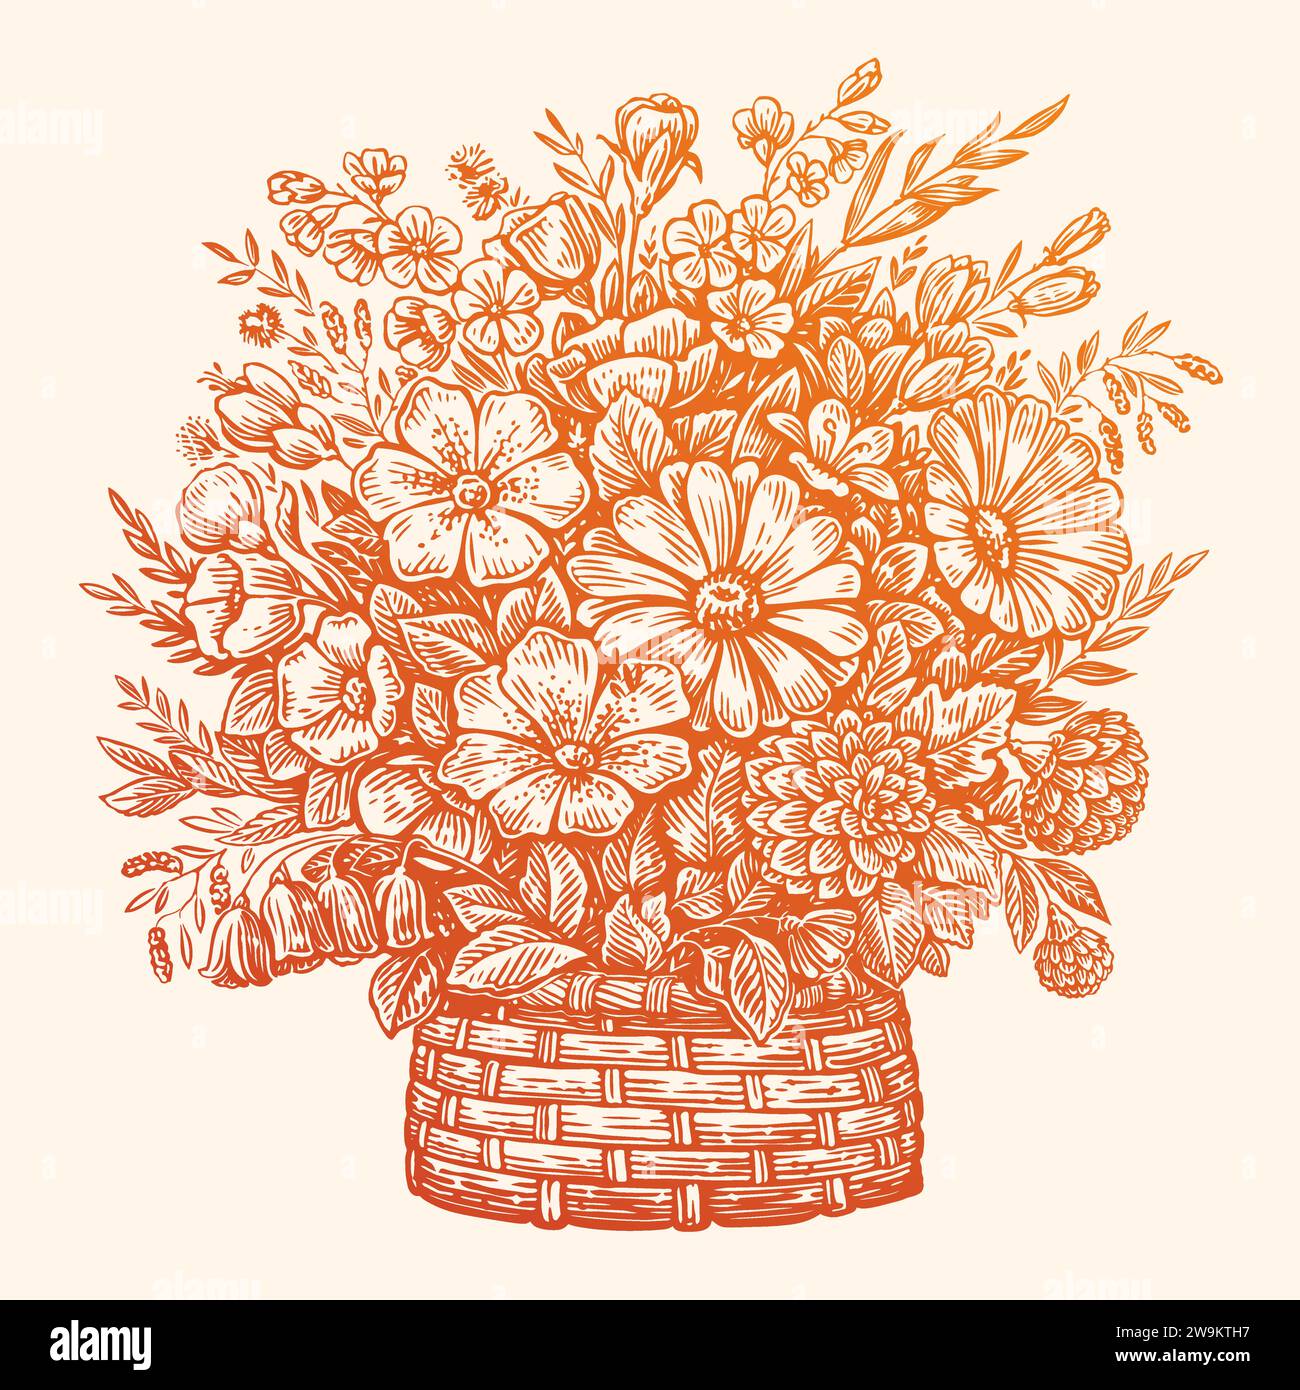 Korb voller schöner Frühlingsblumen. Handgezeichnete Vintage-Skizze Vektor-Illustration Stock Vektor